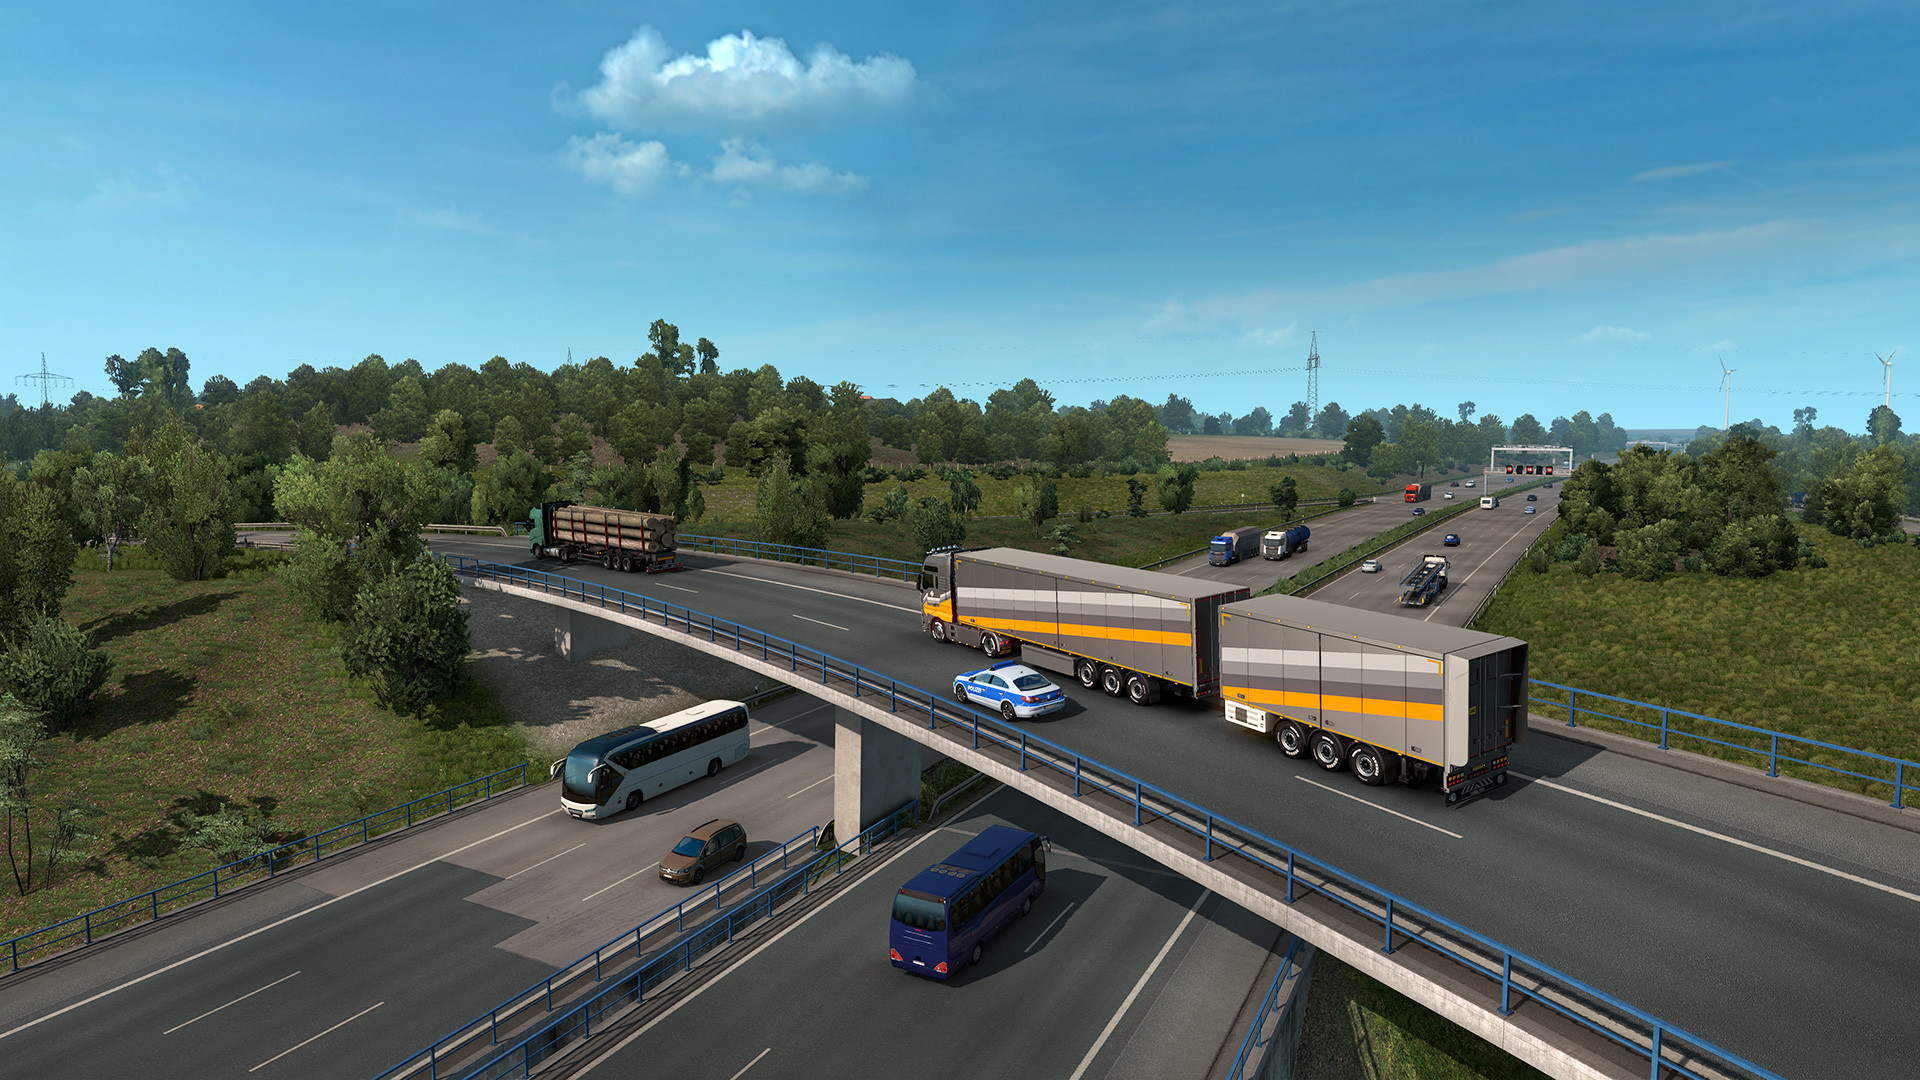 Euro truck simulator 3 download free full version pc game